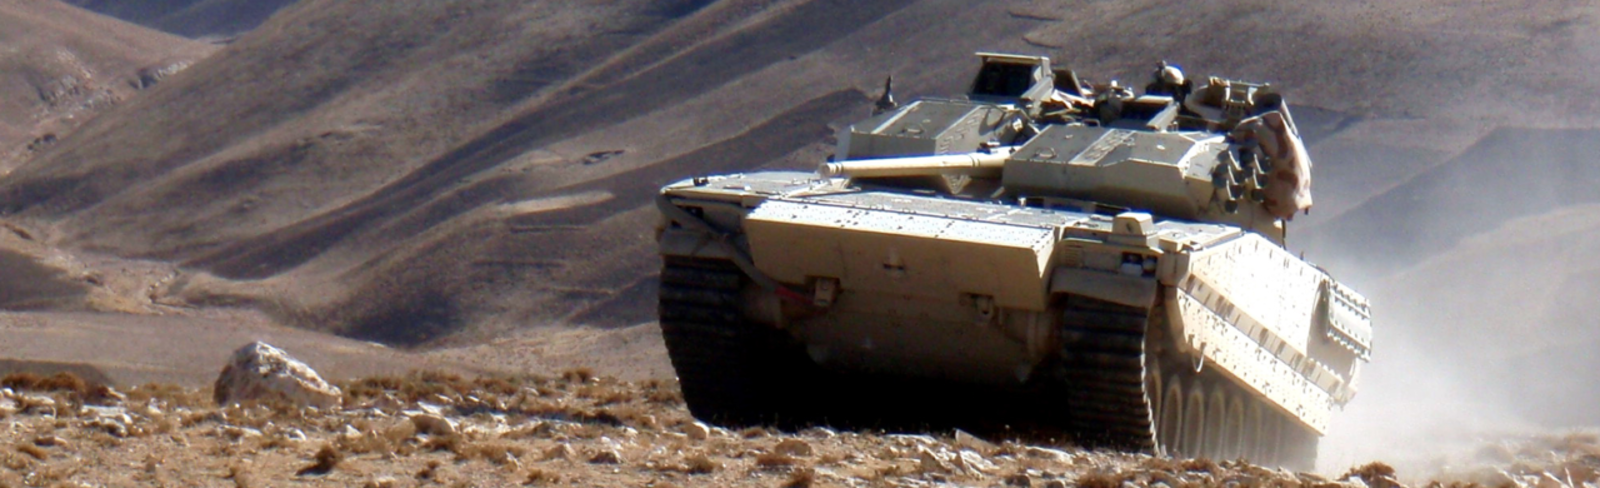 CV90 Vehicle climbs sandy hill